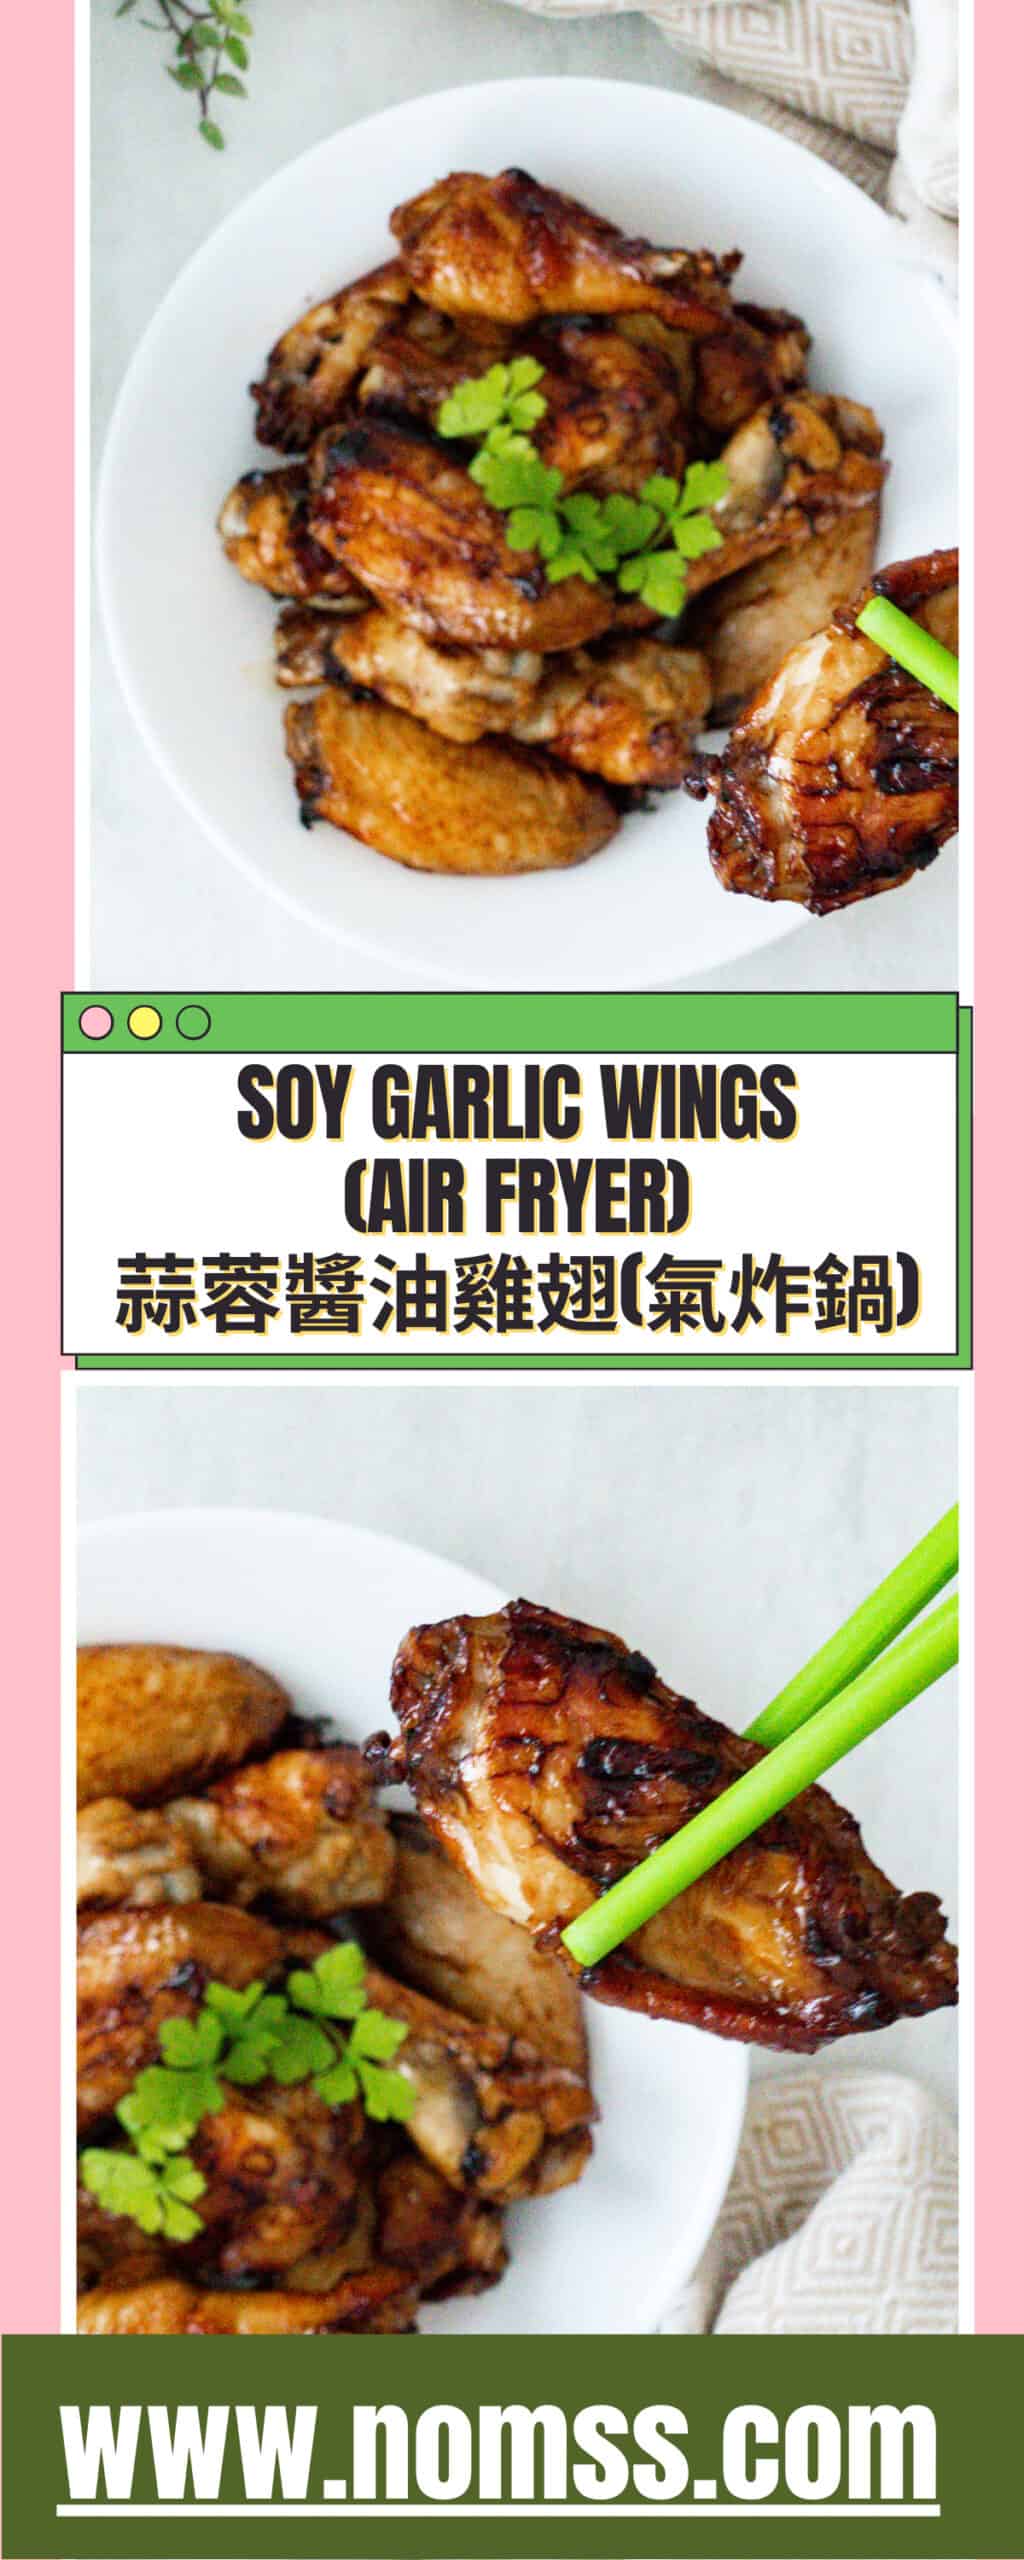 Air Fryer Soy Garlic Chicken Wings 蒜蓉醬油雞翅 氣炸鍋 - Nomss.com